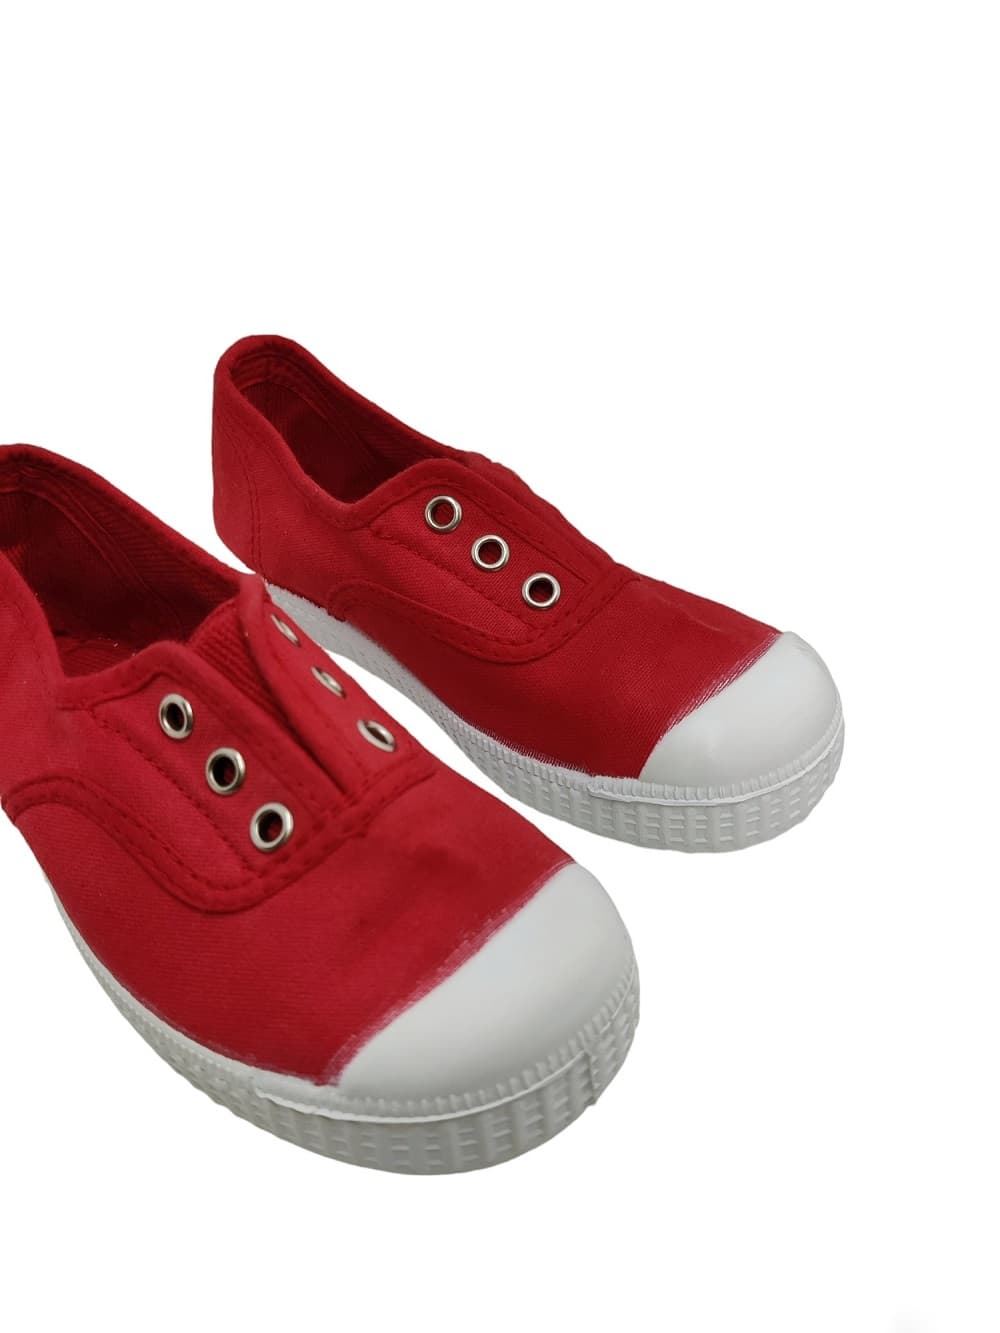 La Cadena Children's Red Canvas Shoes with Toecap - Image 4